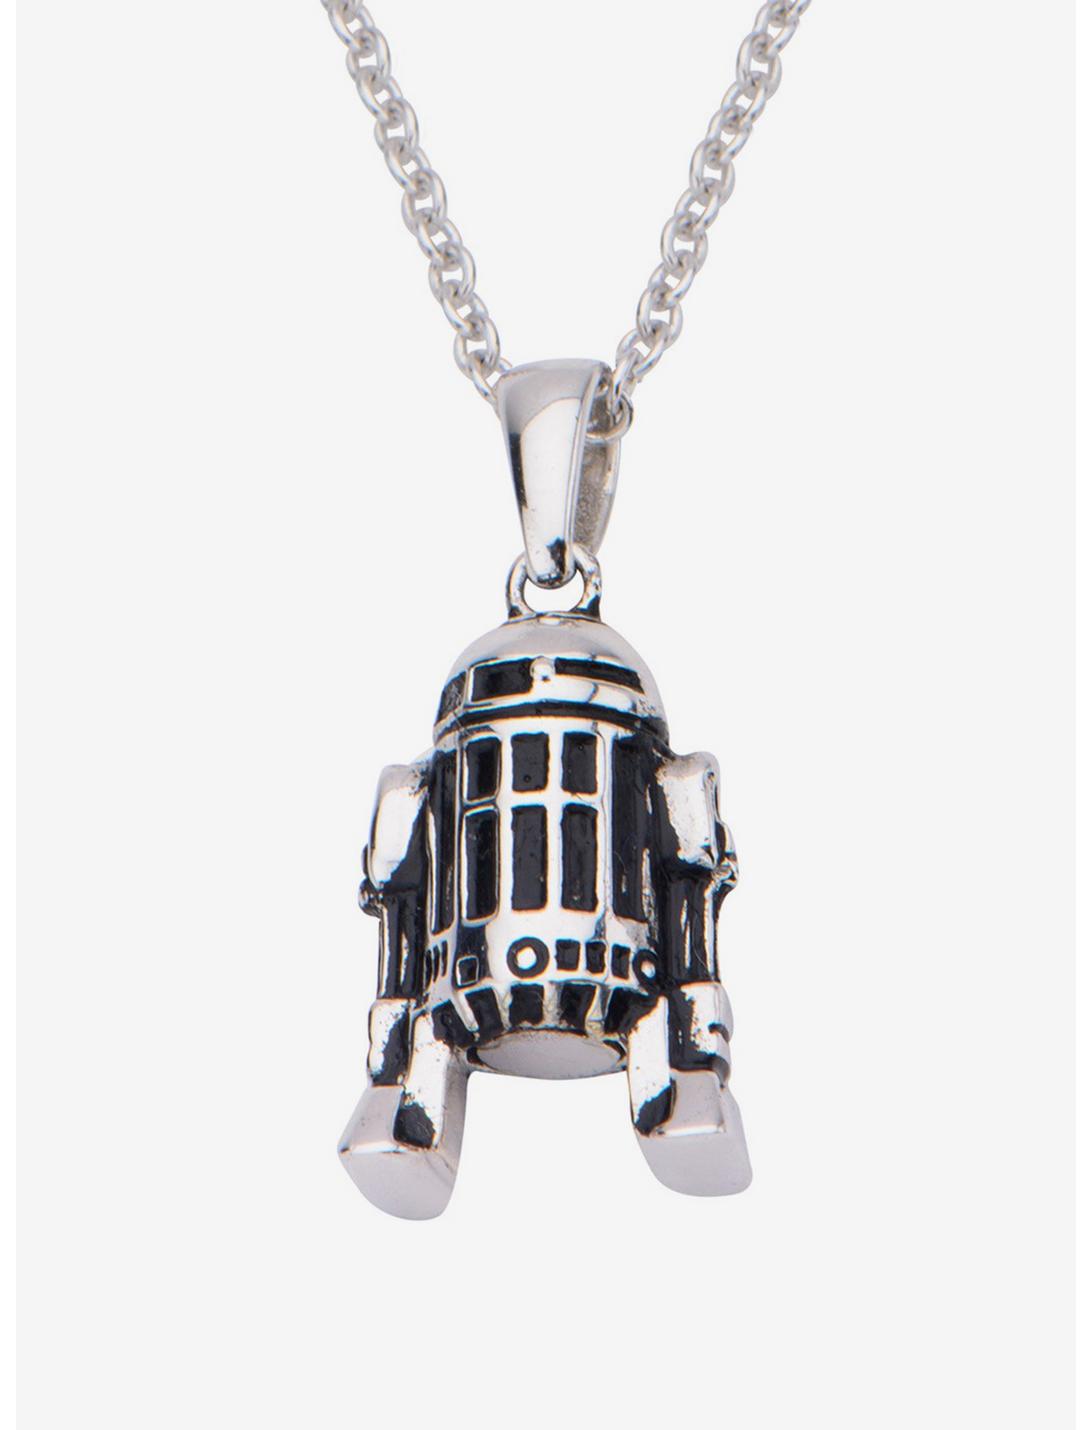 Star Wars R2-D2 Pendant Necklace, , hi-res